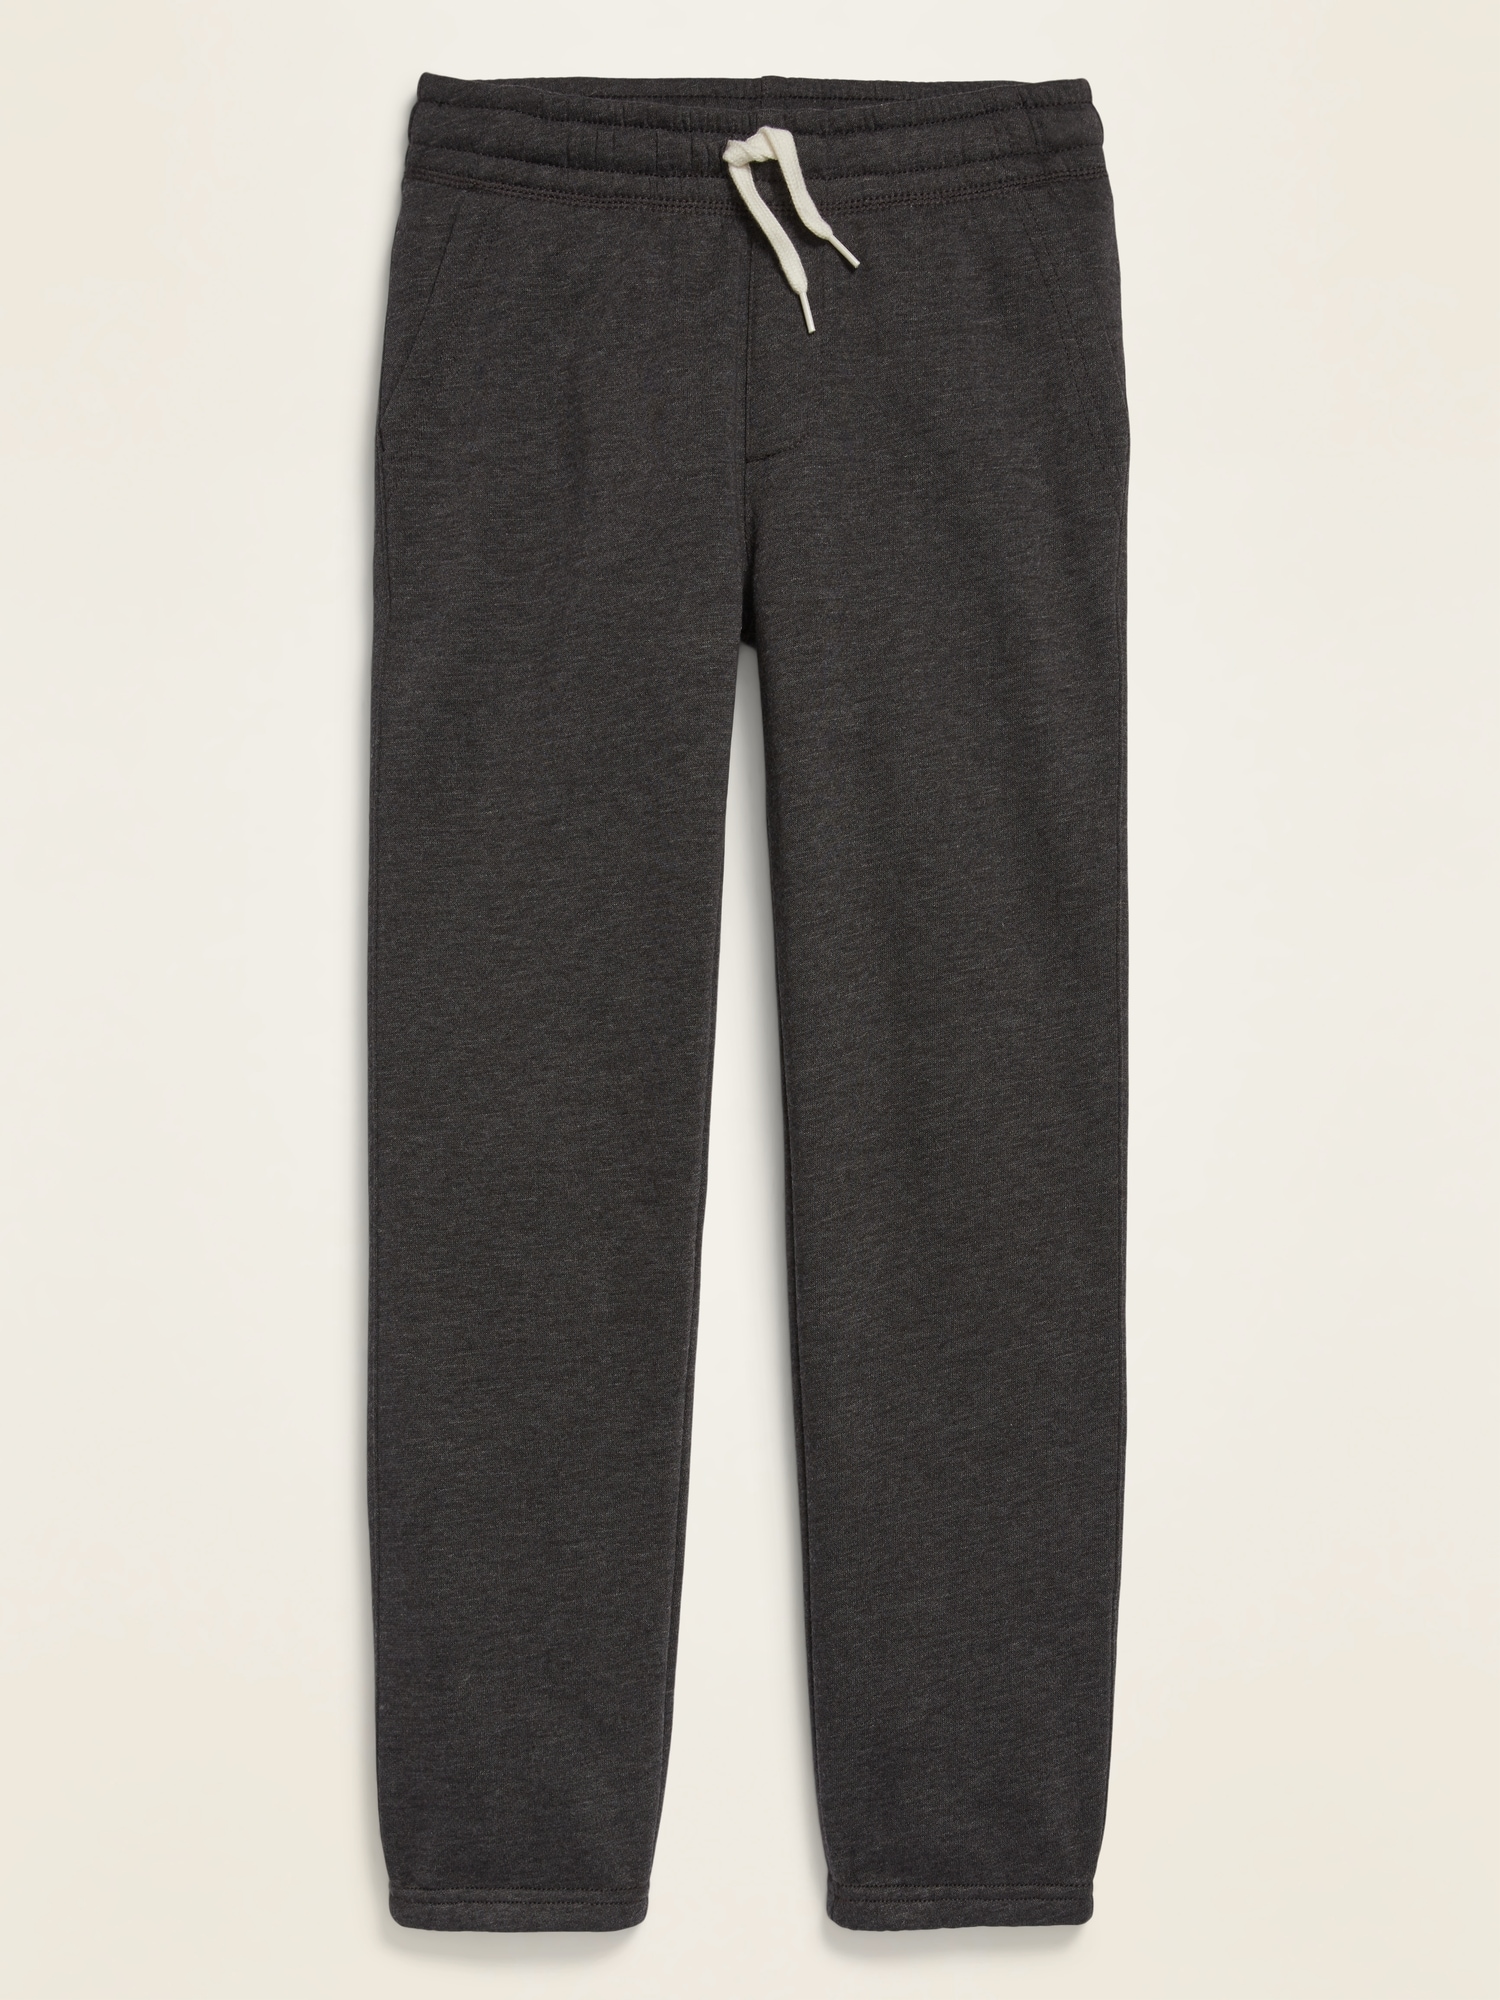 Old Navy gender-neutral Drawstring-Waist Sweatpants - Black - Size S